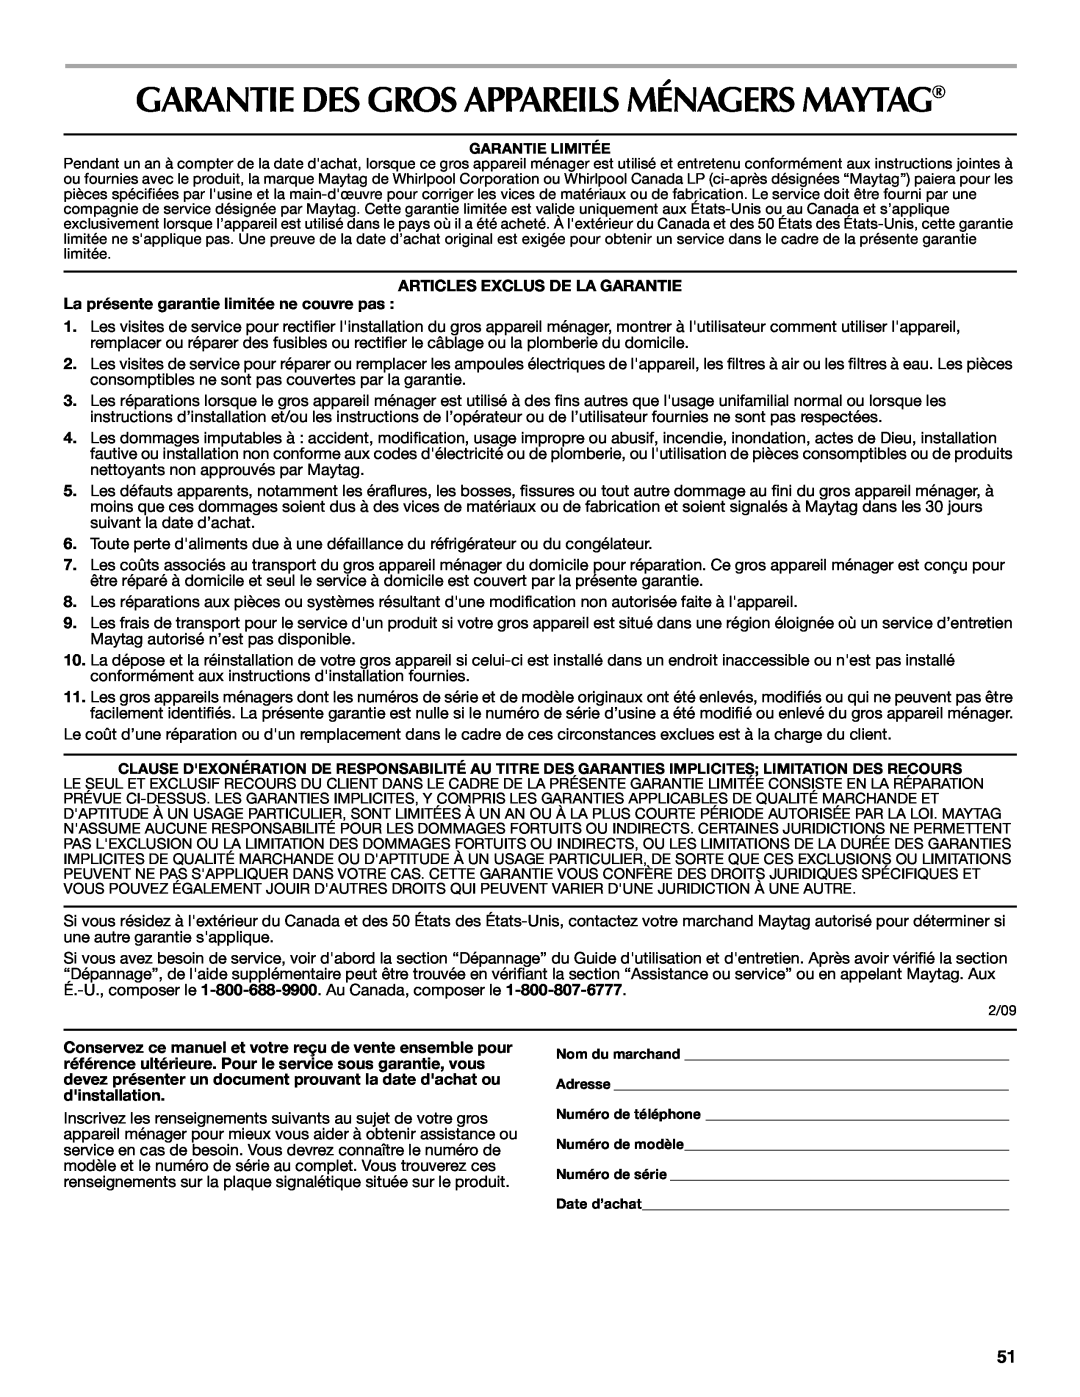 Maytag MET8885XS, W10289539A manual Garantie Des Gros Appareils Ménagers Maytag, Articles Exclus De La Garantie 